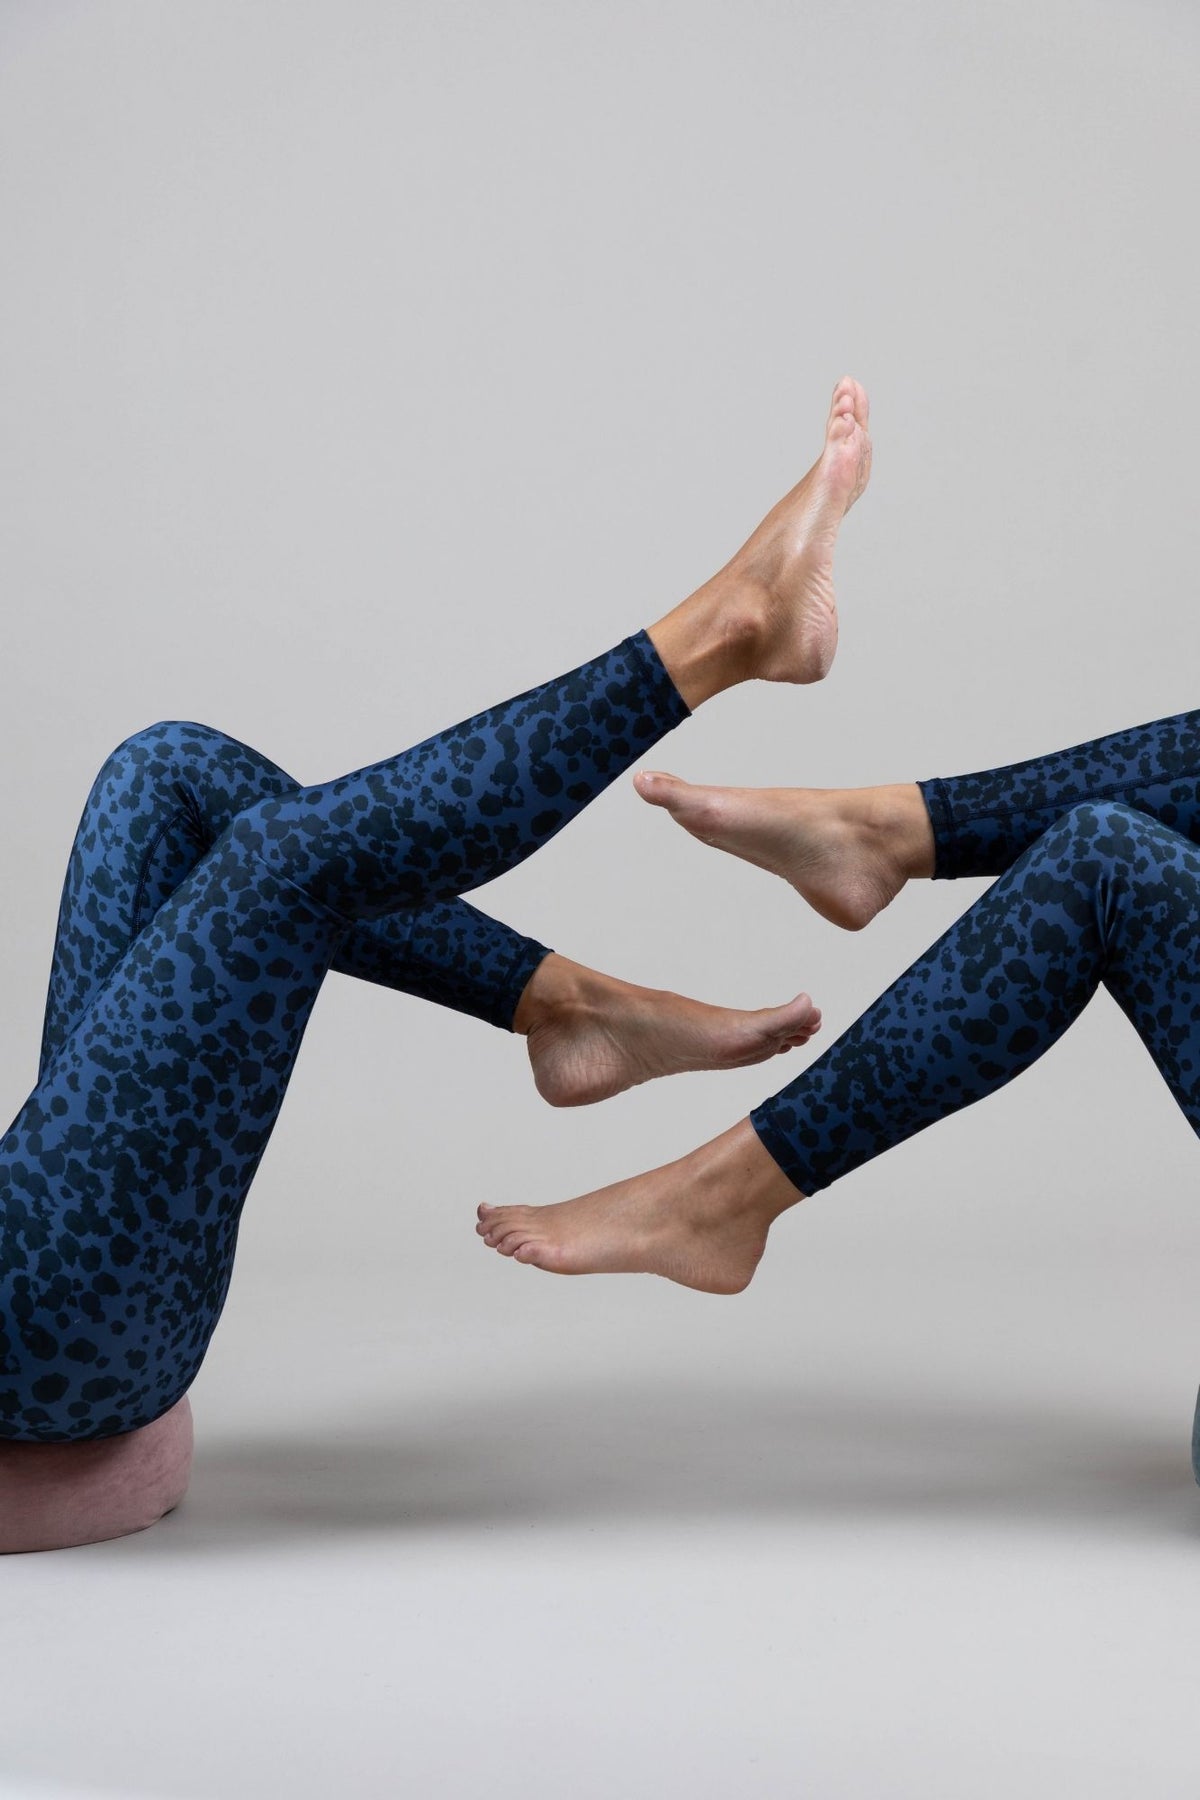 Ambiletics LEOPARD | nachhaltige Yogaleggings Laufhose & und fair recycelt 